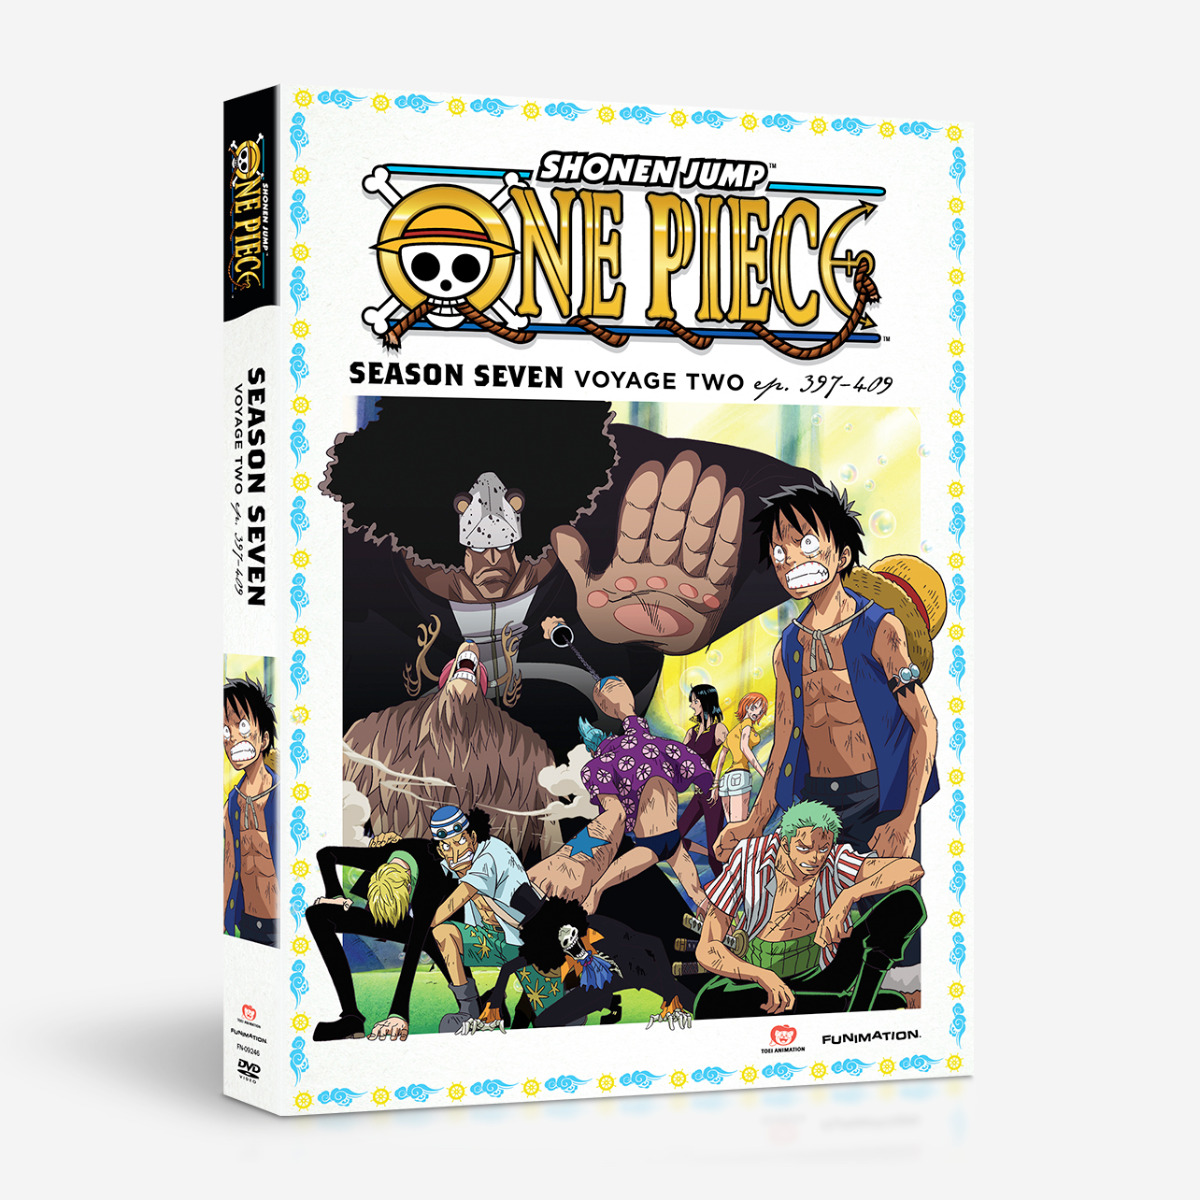 One Piece - Season 7 - Voyage 2 - DVD image count 0